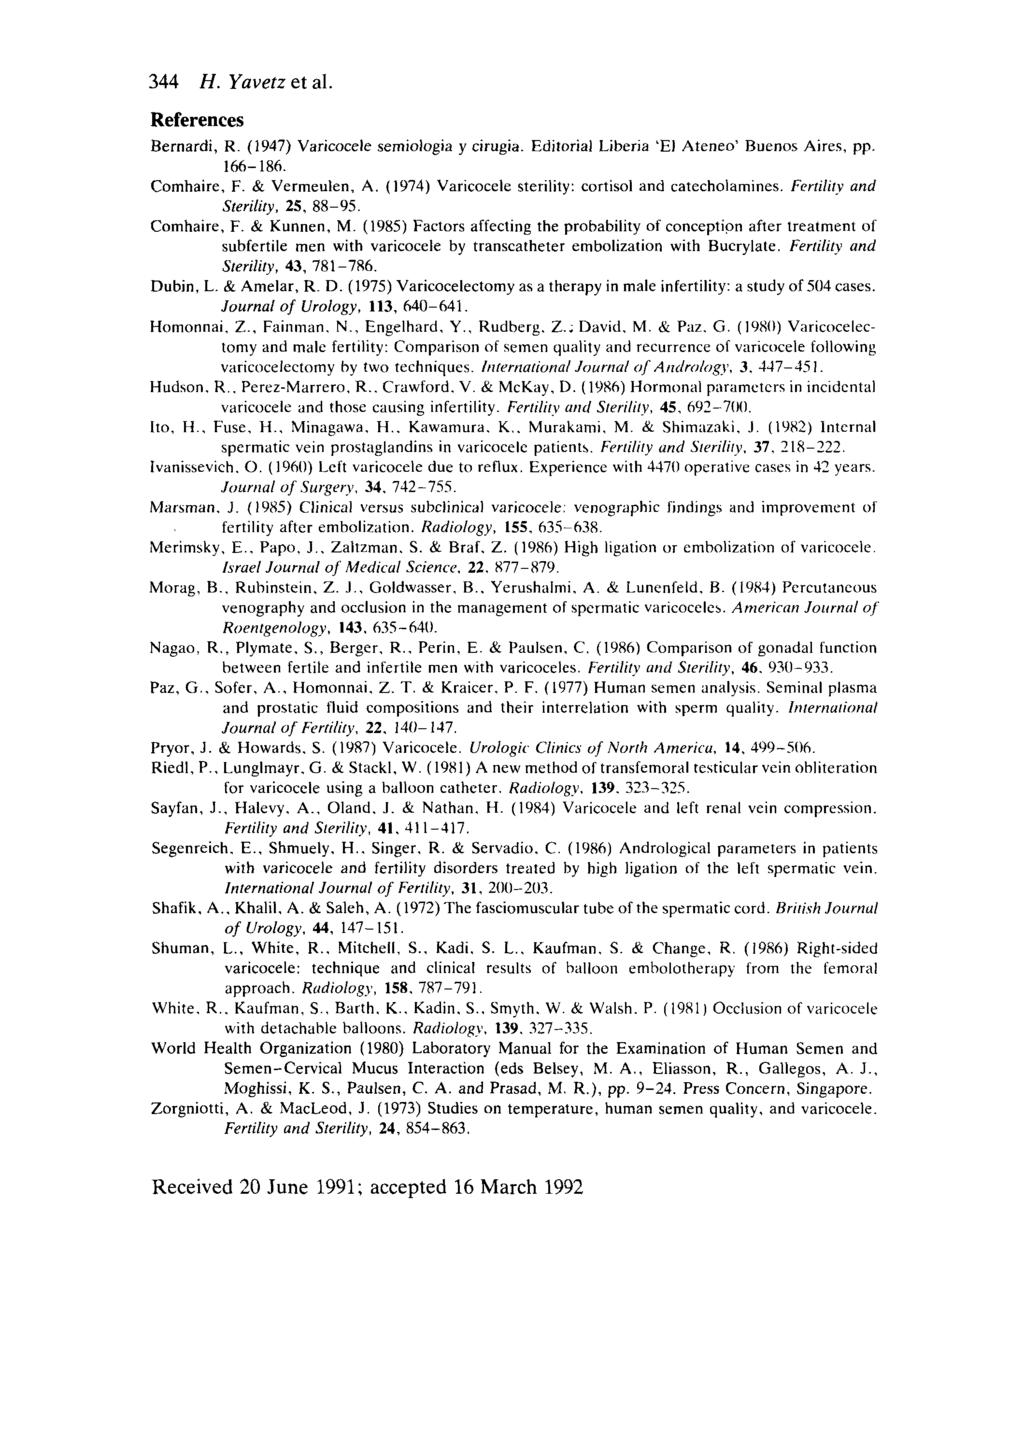 344 H. Yavetz et al. References Bernardi, R. (1947) Varicocele semiologia y cirugia. Editorial Liberia El Ateneo Buenos Aires, pp. 166-186. Comhaire, F. & Vermeulen, A.